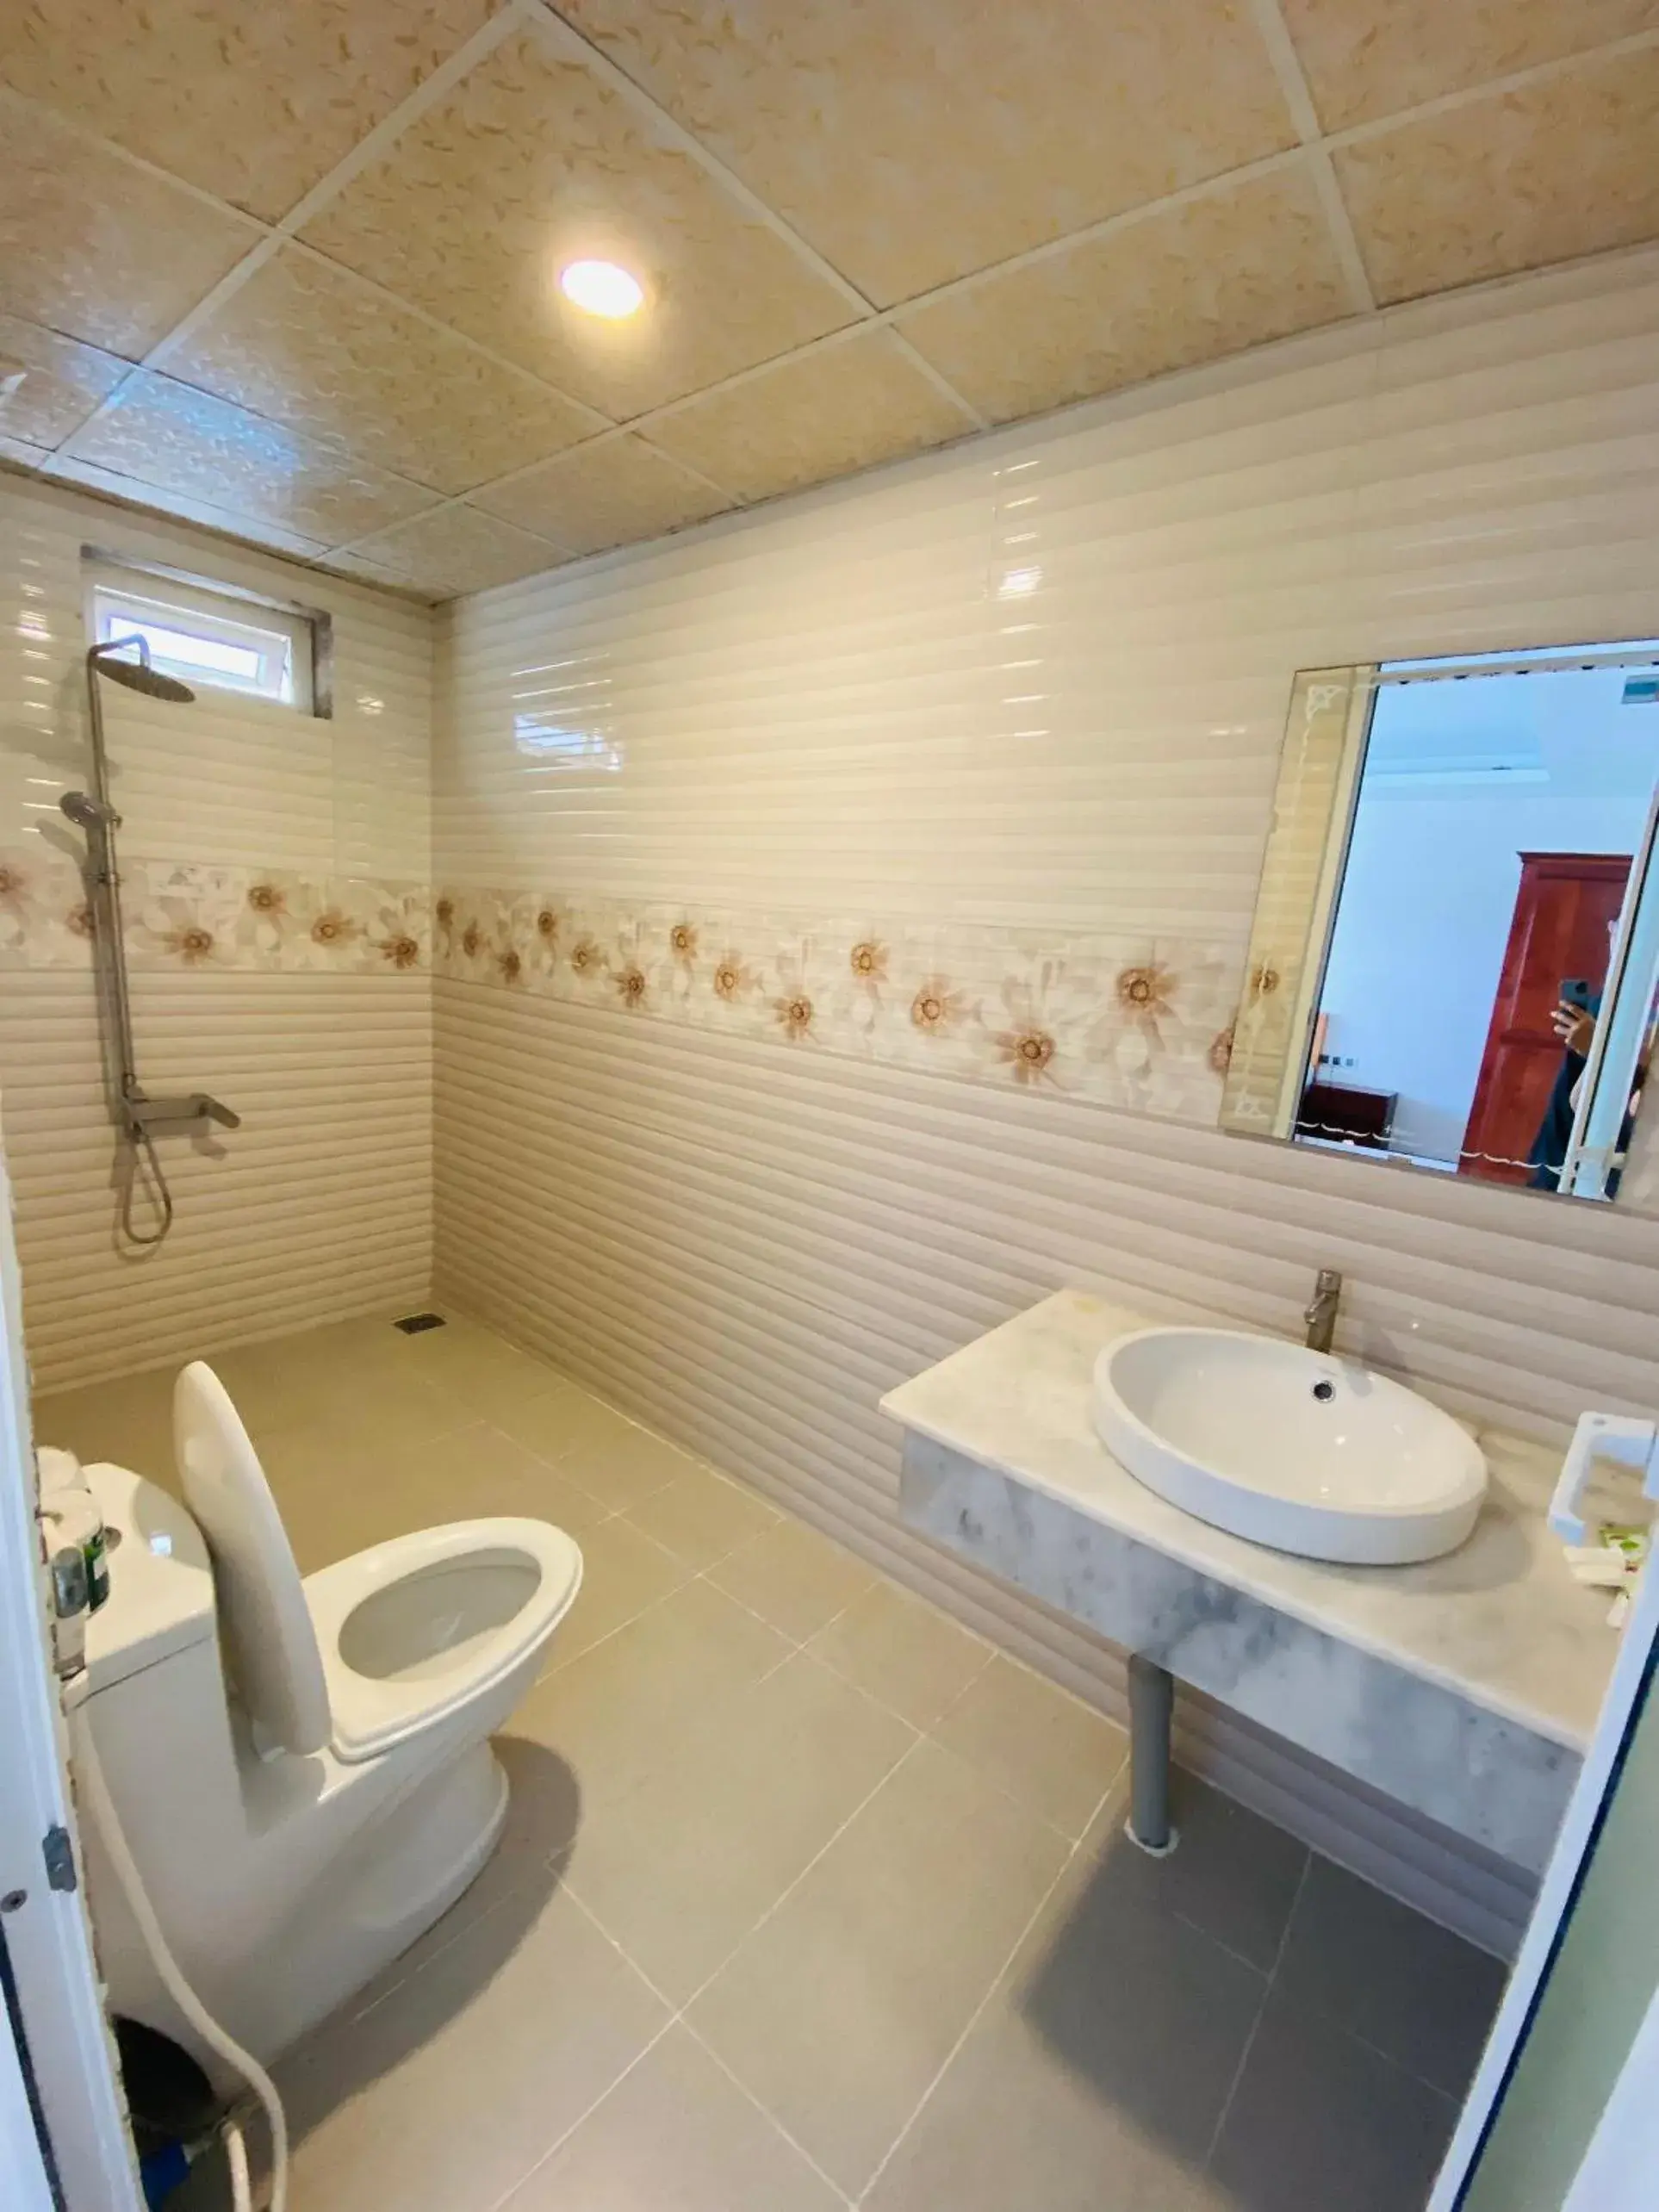 Toilet, Bathroom in Phuong Binh House